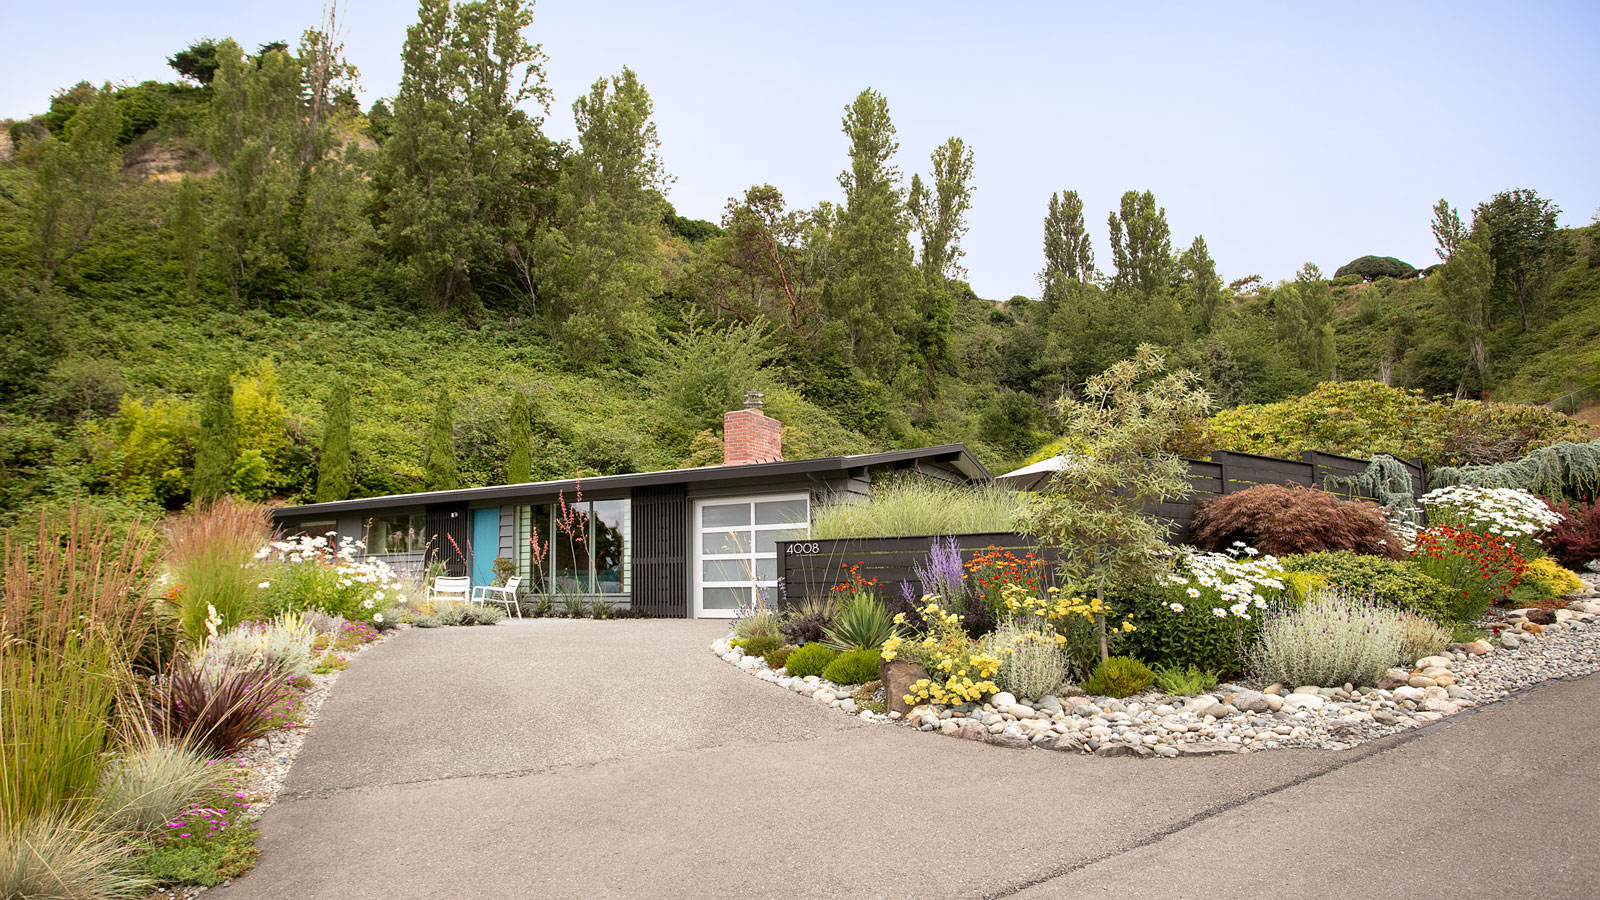 Sheri Olson Architecture - Mid-Century Garden - Seattle Residential Architect